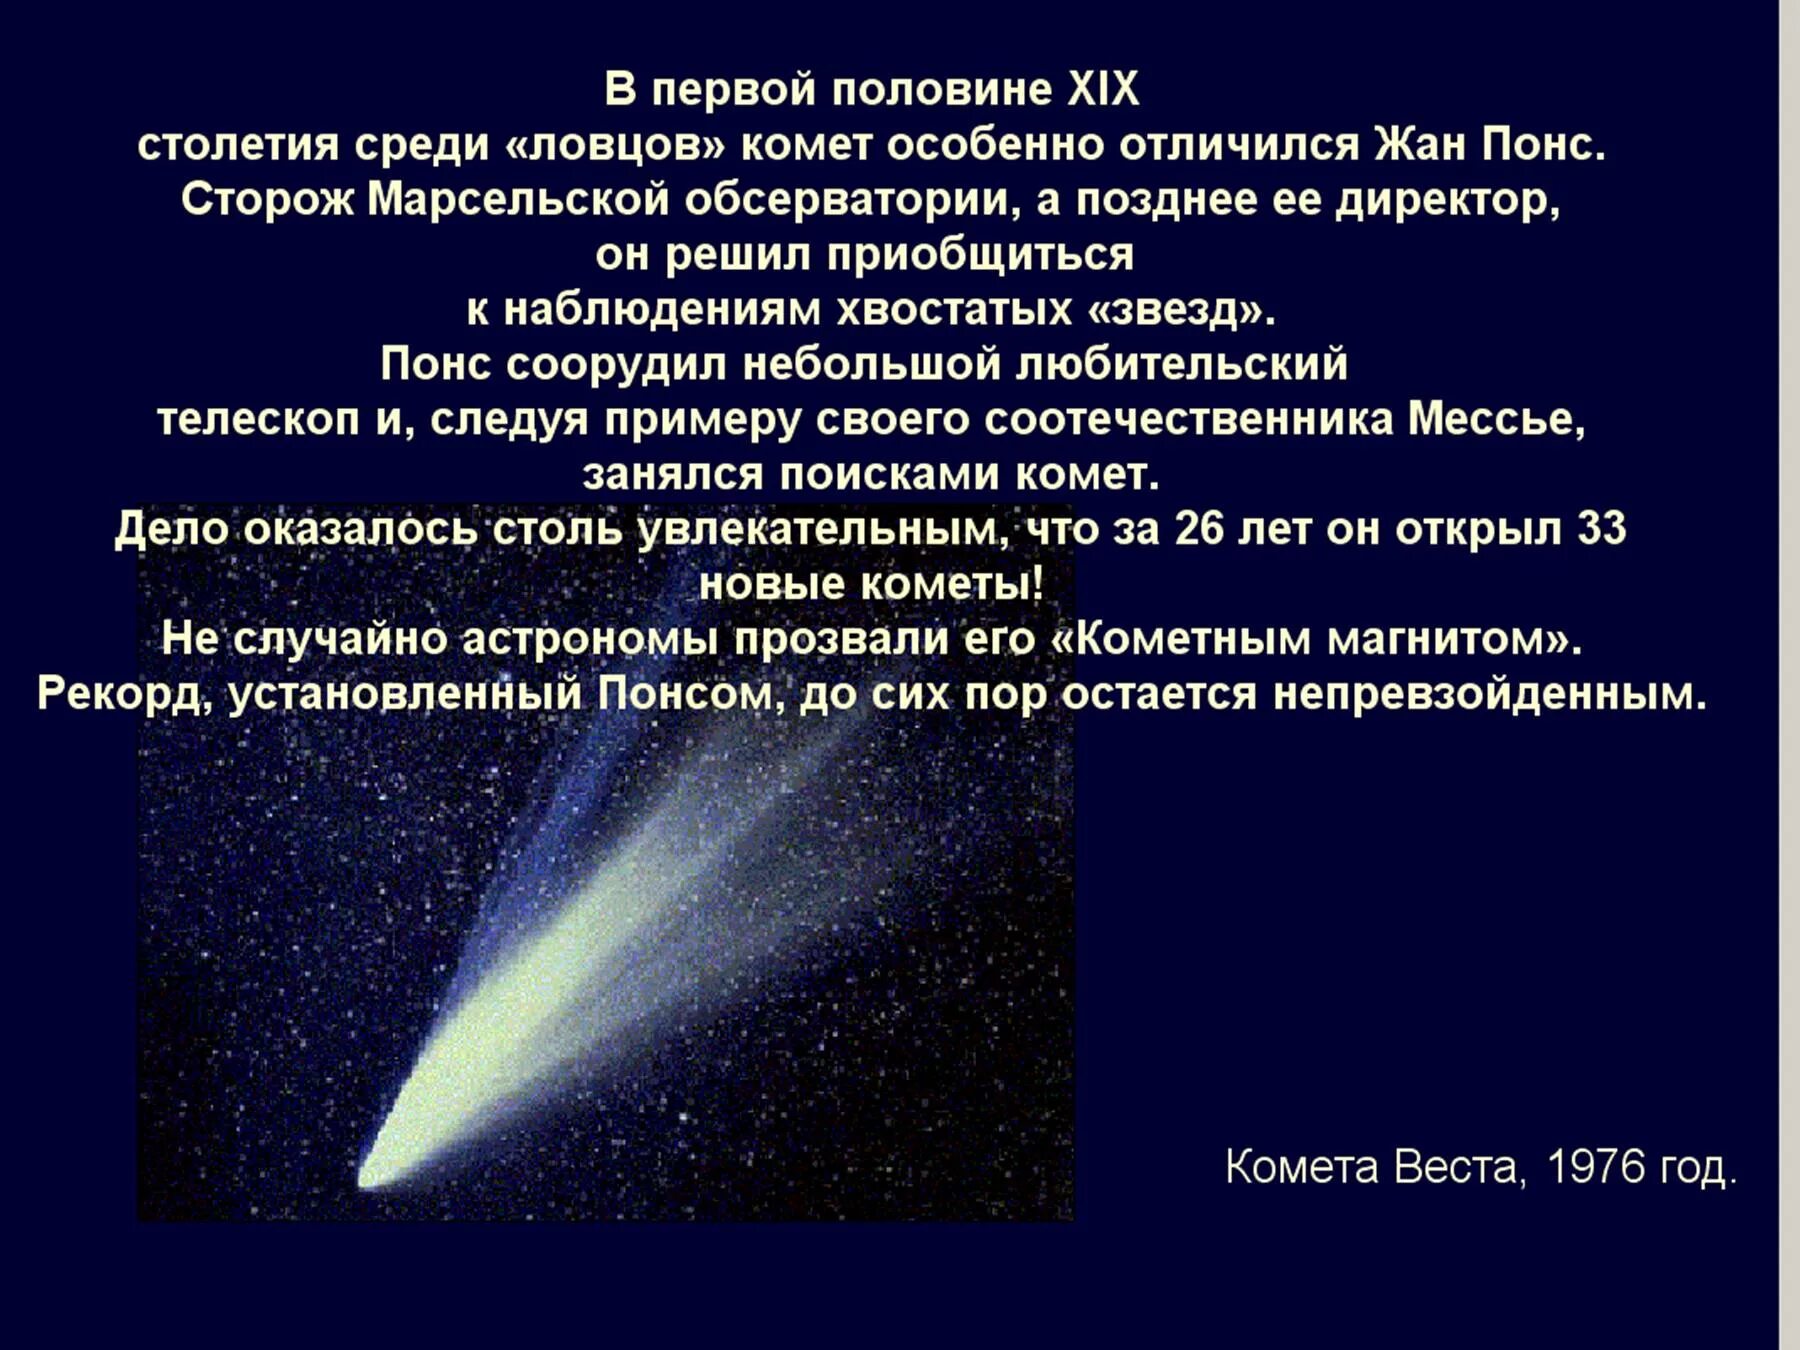 Кометы презентация. Презентация на тему кометы. Кометы астрономия. Кометы и метеориты слайд.